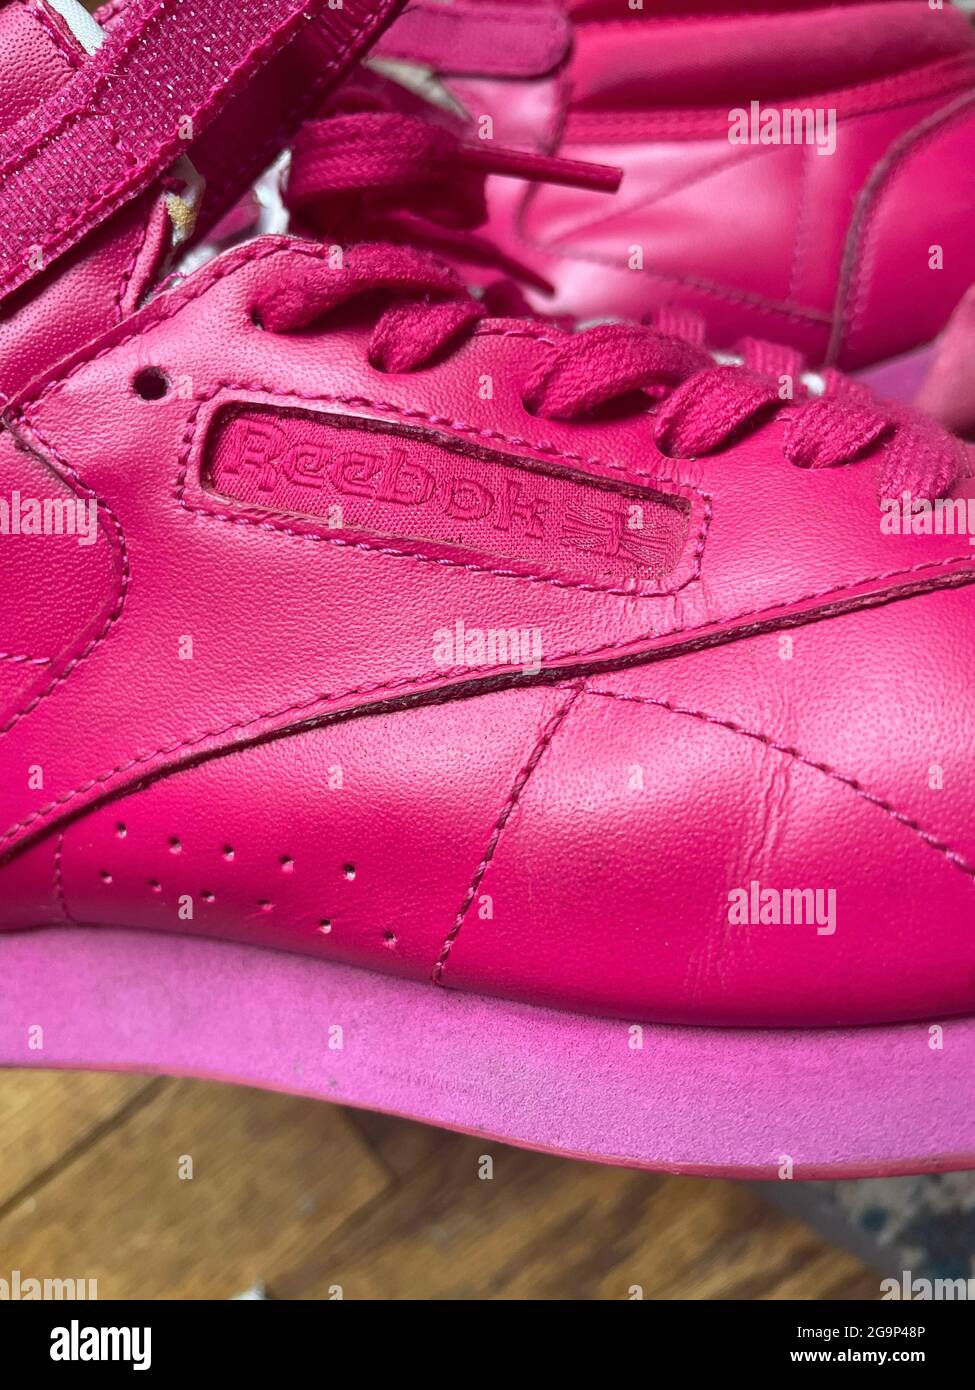 Close up of Reebok Freestyle Hi Women's Shoes Stock Photo - Alamy